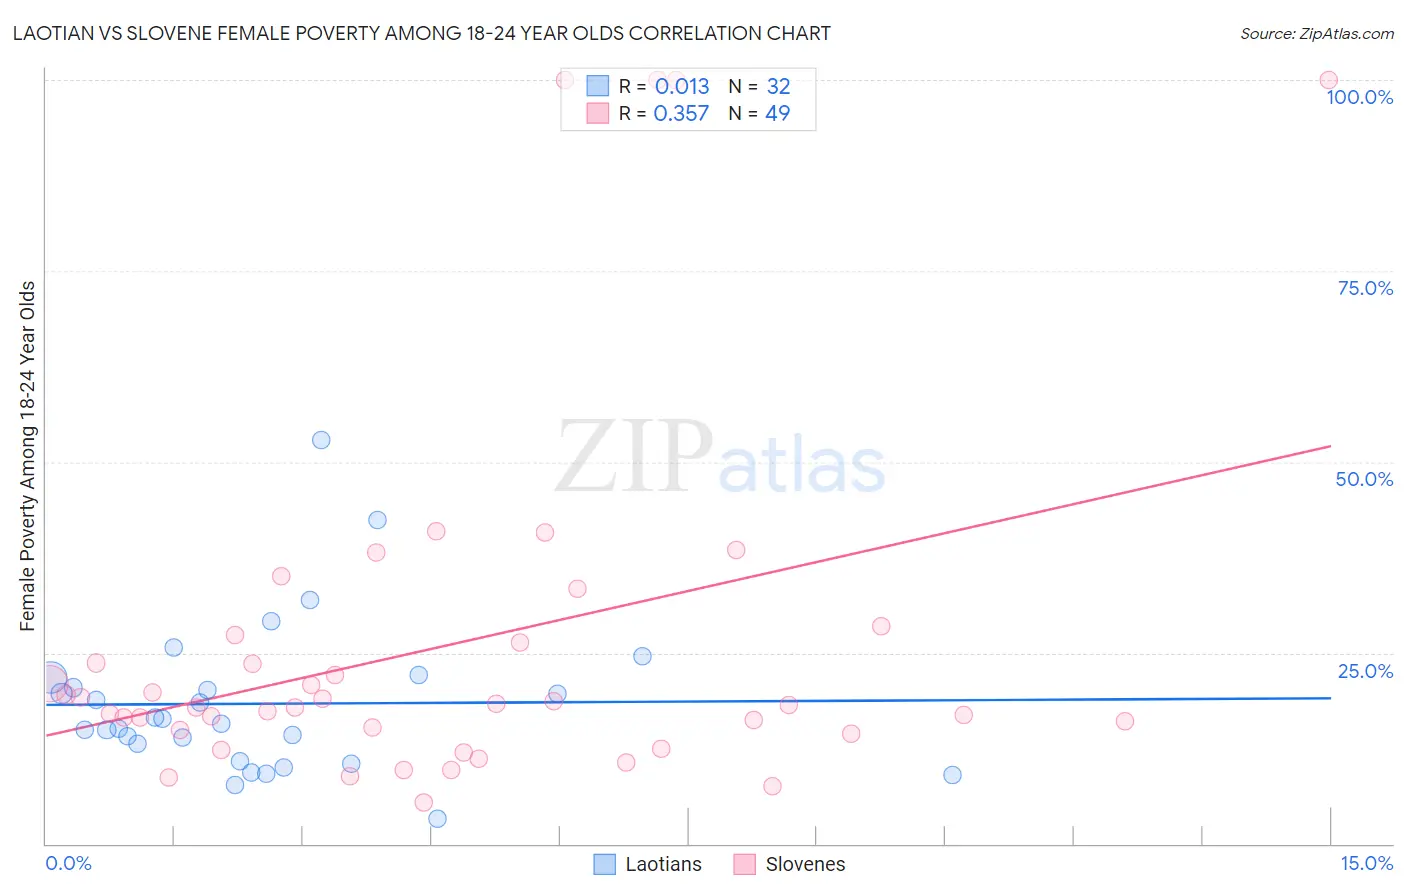 Laotian vs Slovene Female Poverty Among 18-24 Year Olds